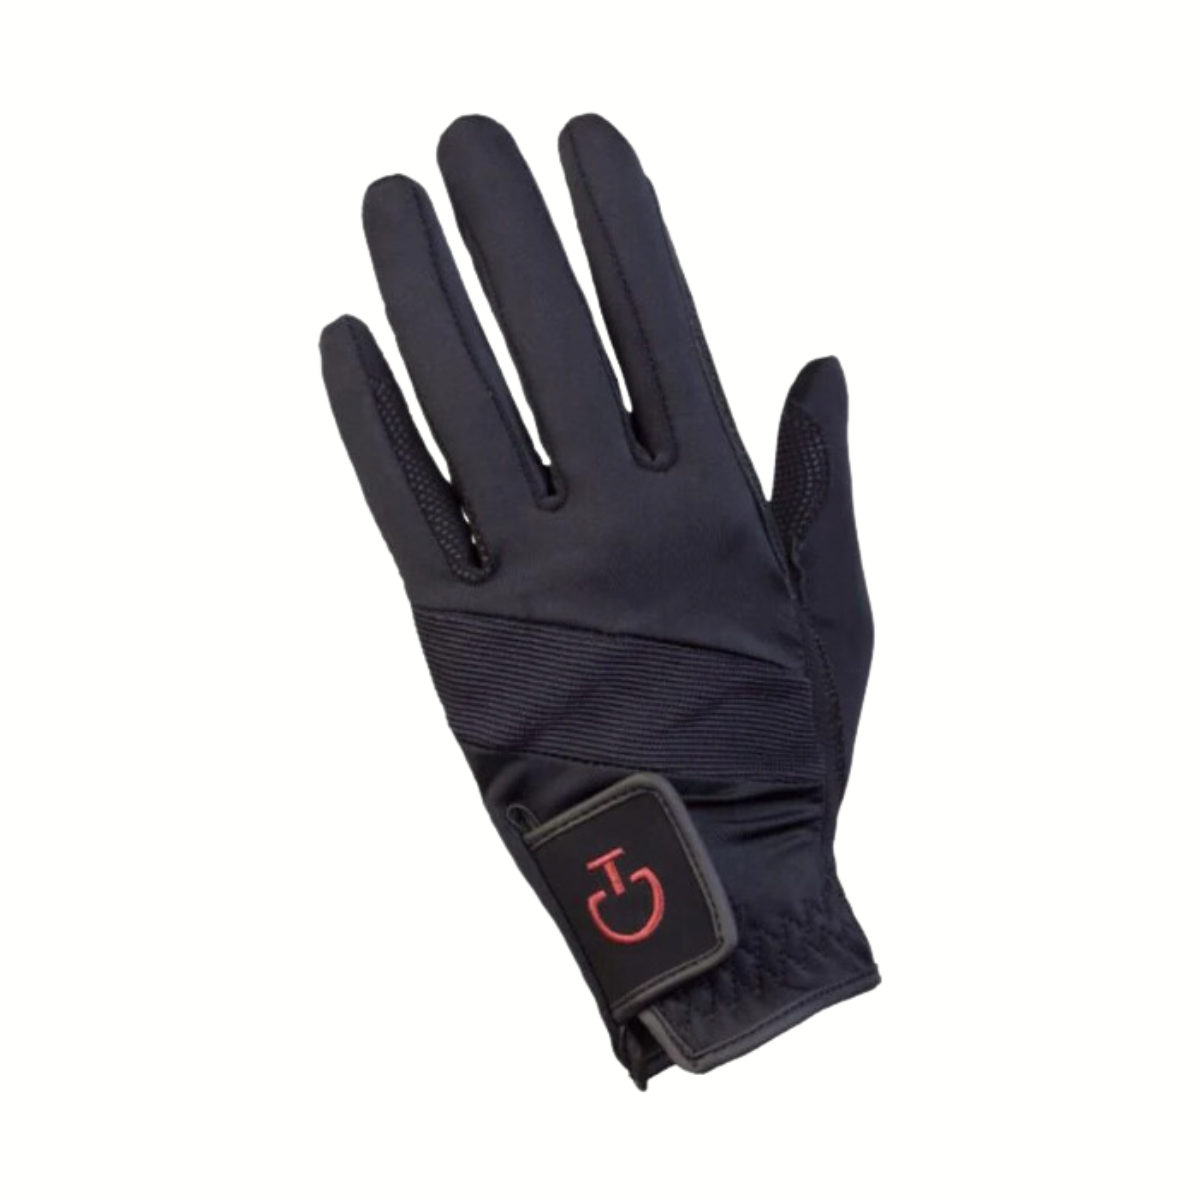 Cavalleria Toscana Tech Gloves in Black - 8